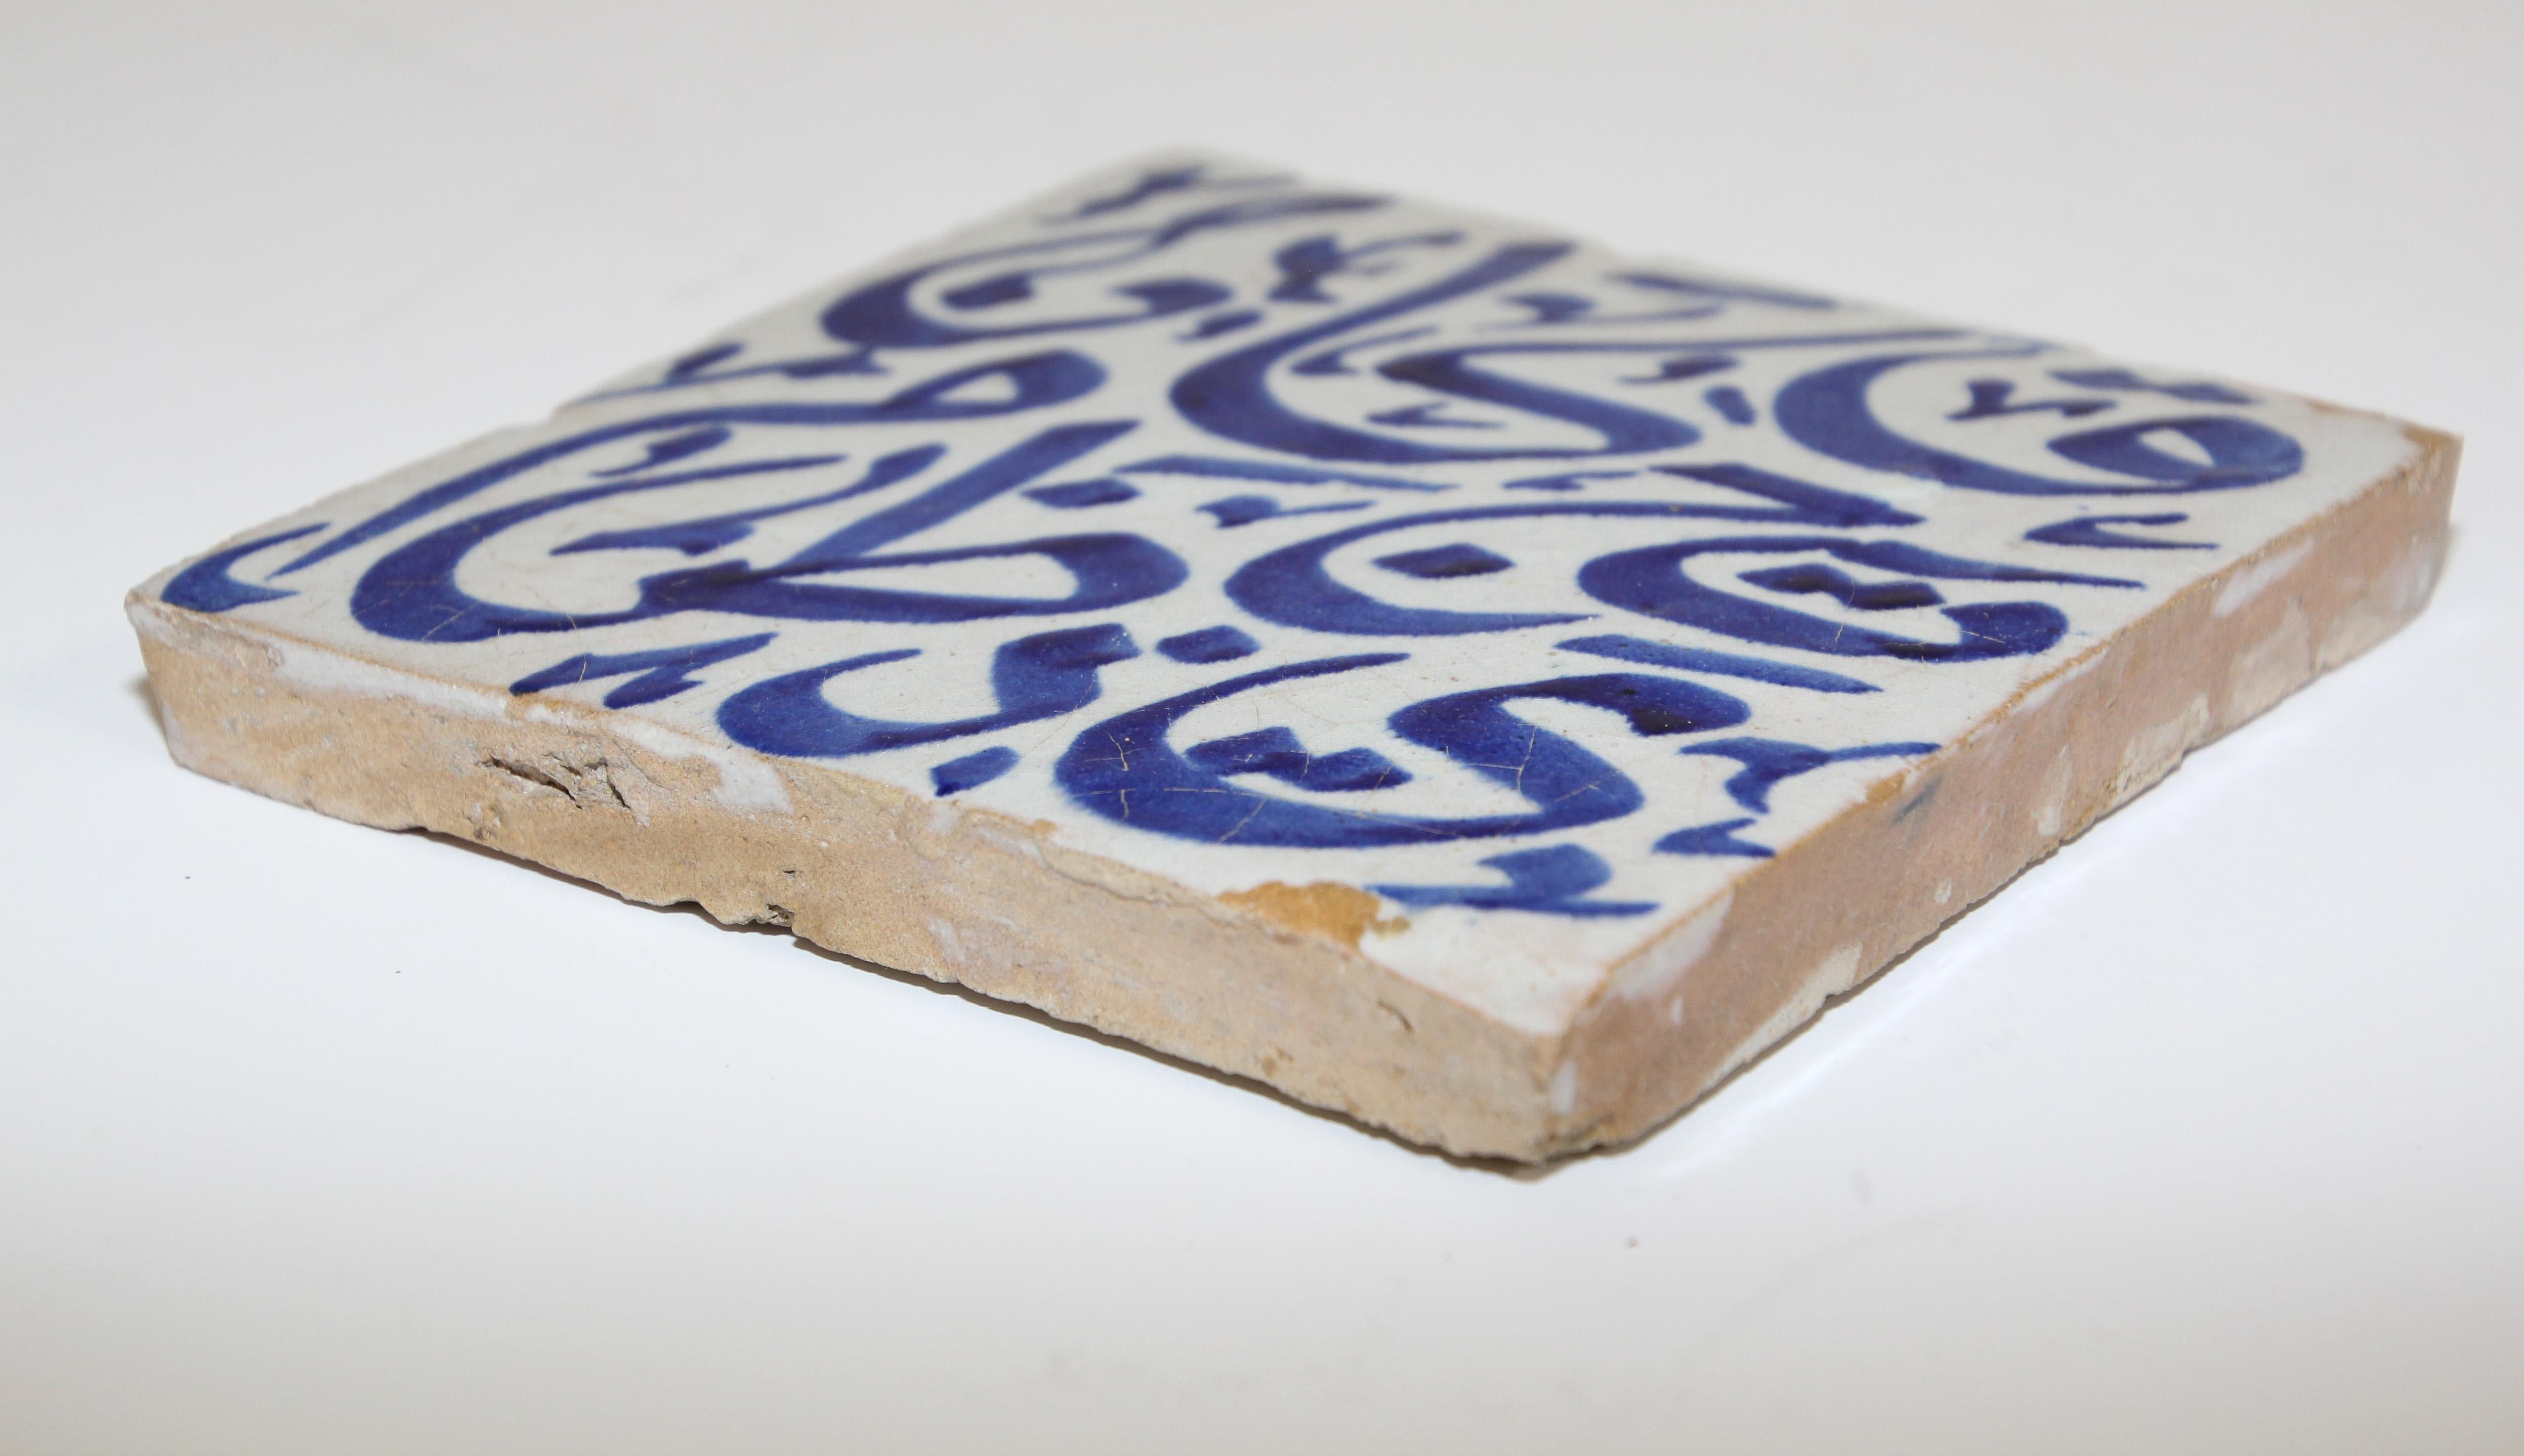 Ceramic Moorish Tile with Blue Arabic Writing